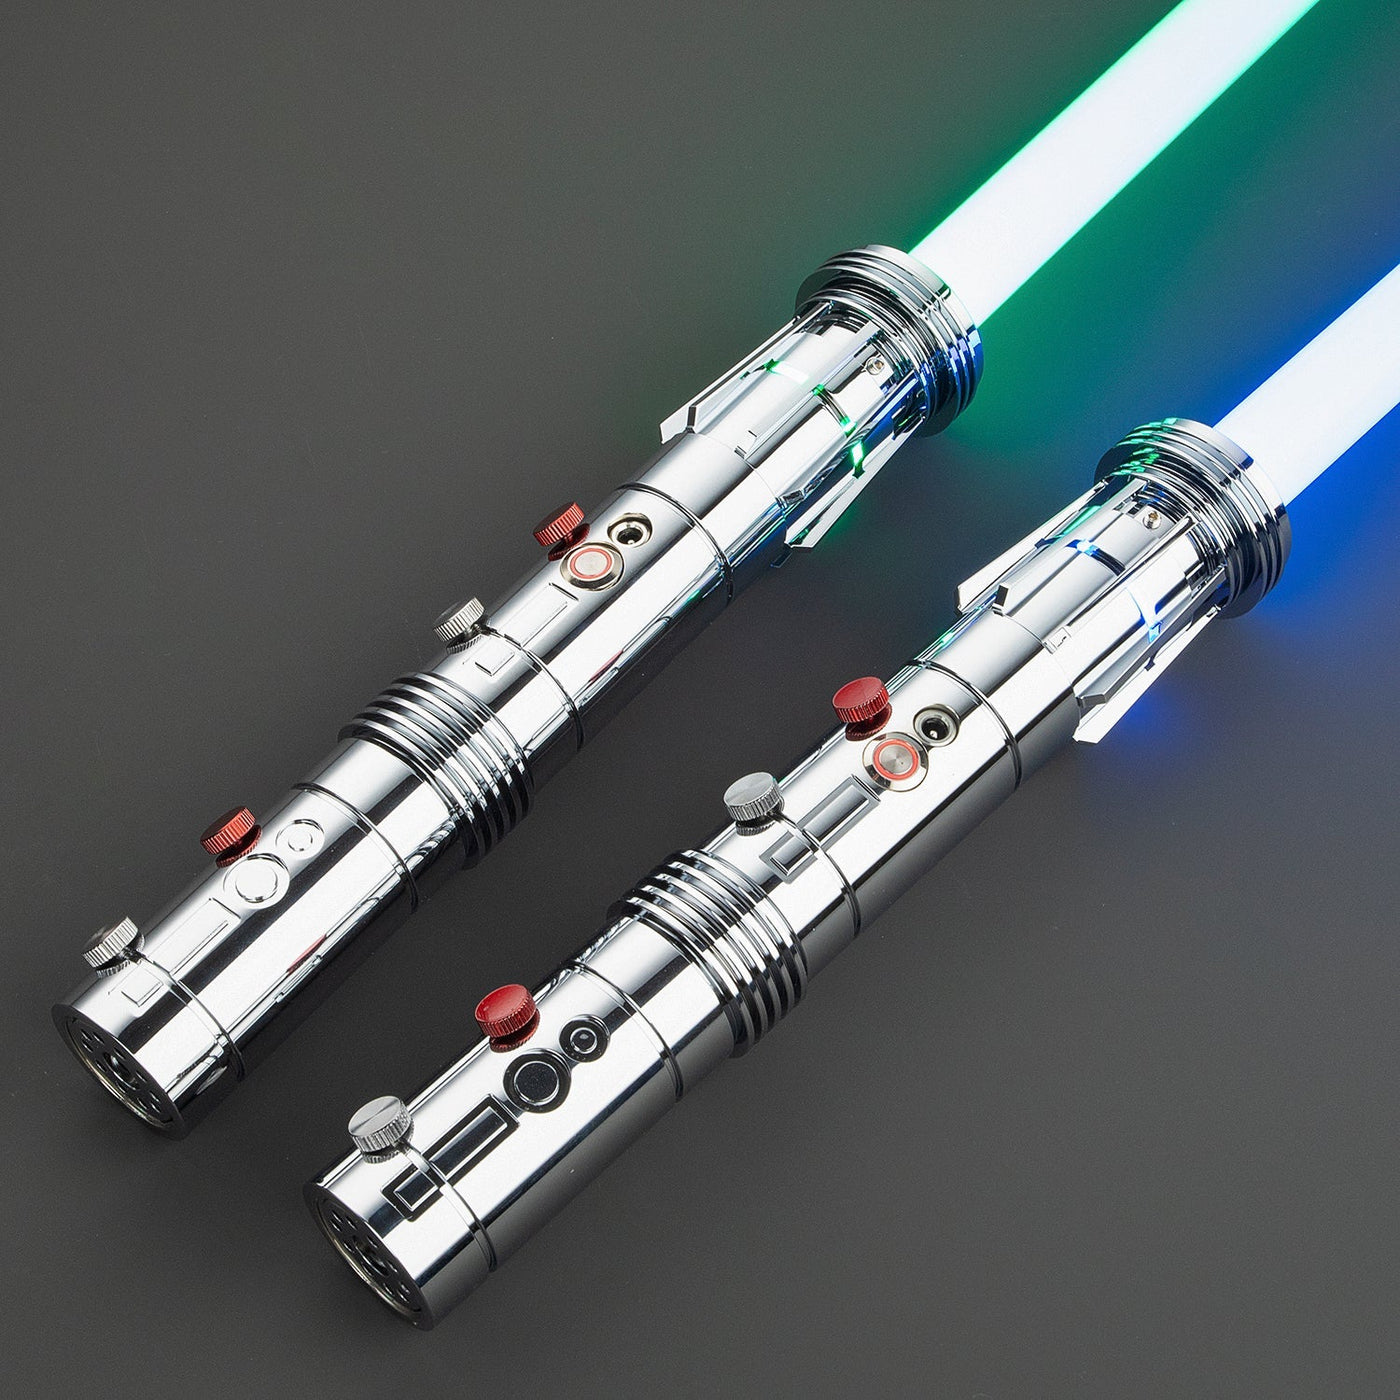 Saberstaff Zilver - KenJo Sabers - Premium RGB Baselit - Star Wars Lightsaber replica Jedi Sith - Best sabershop Europe - Nederland light sabers kopen -